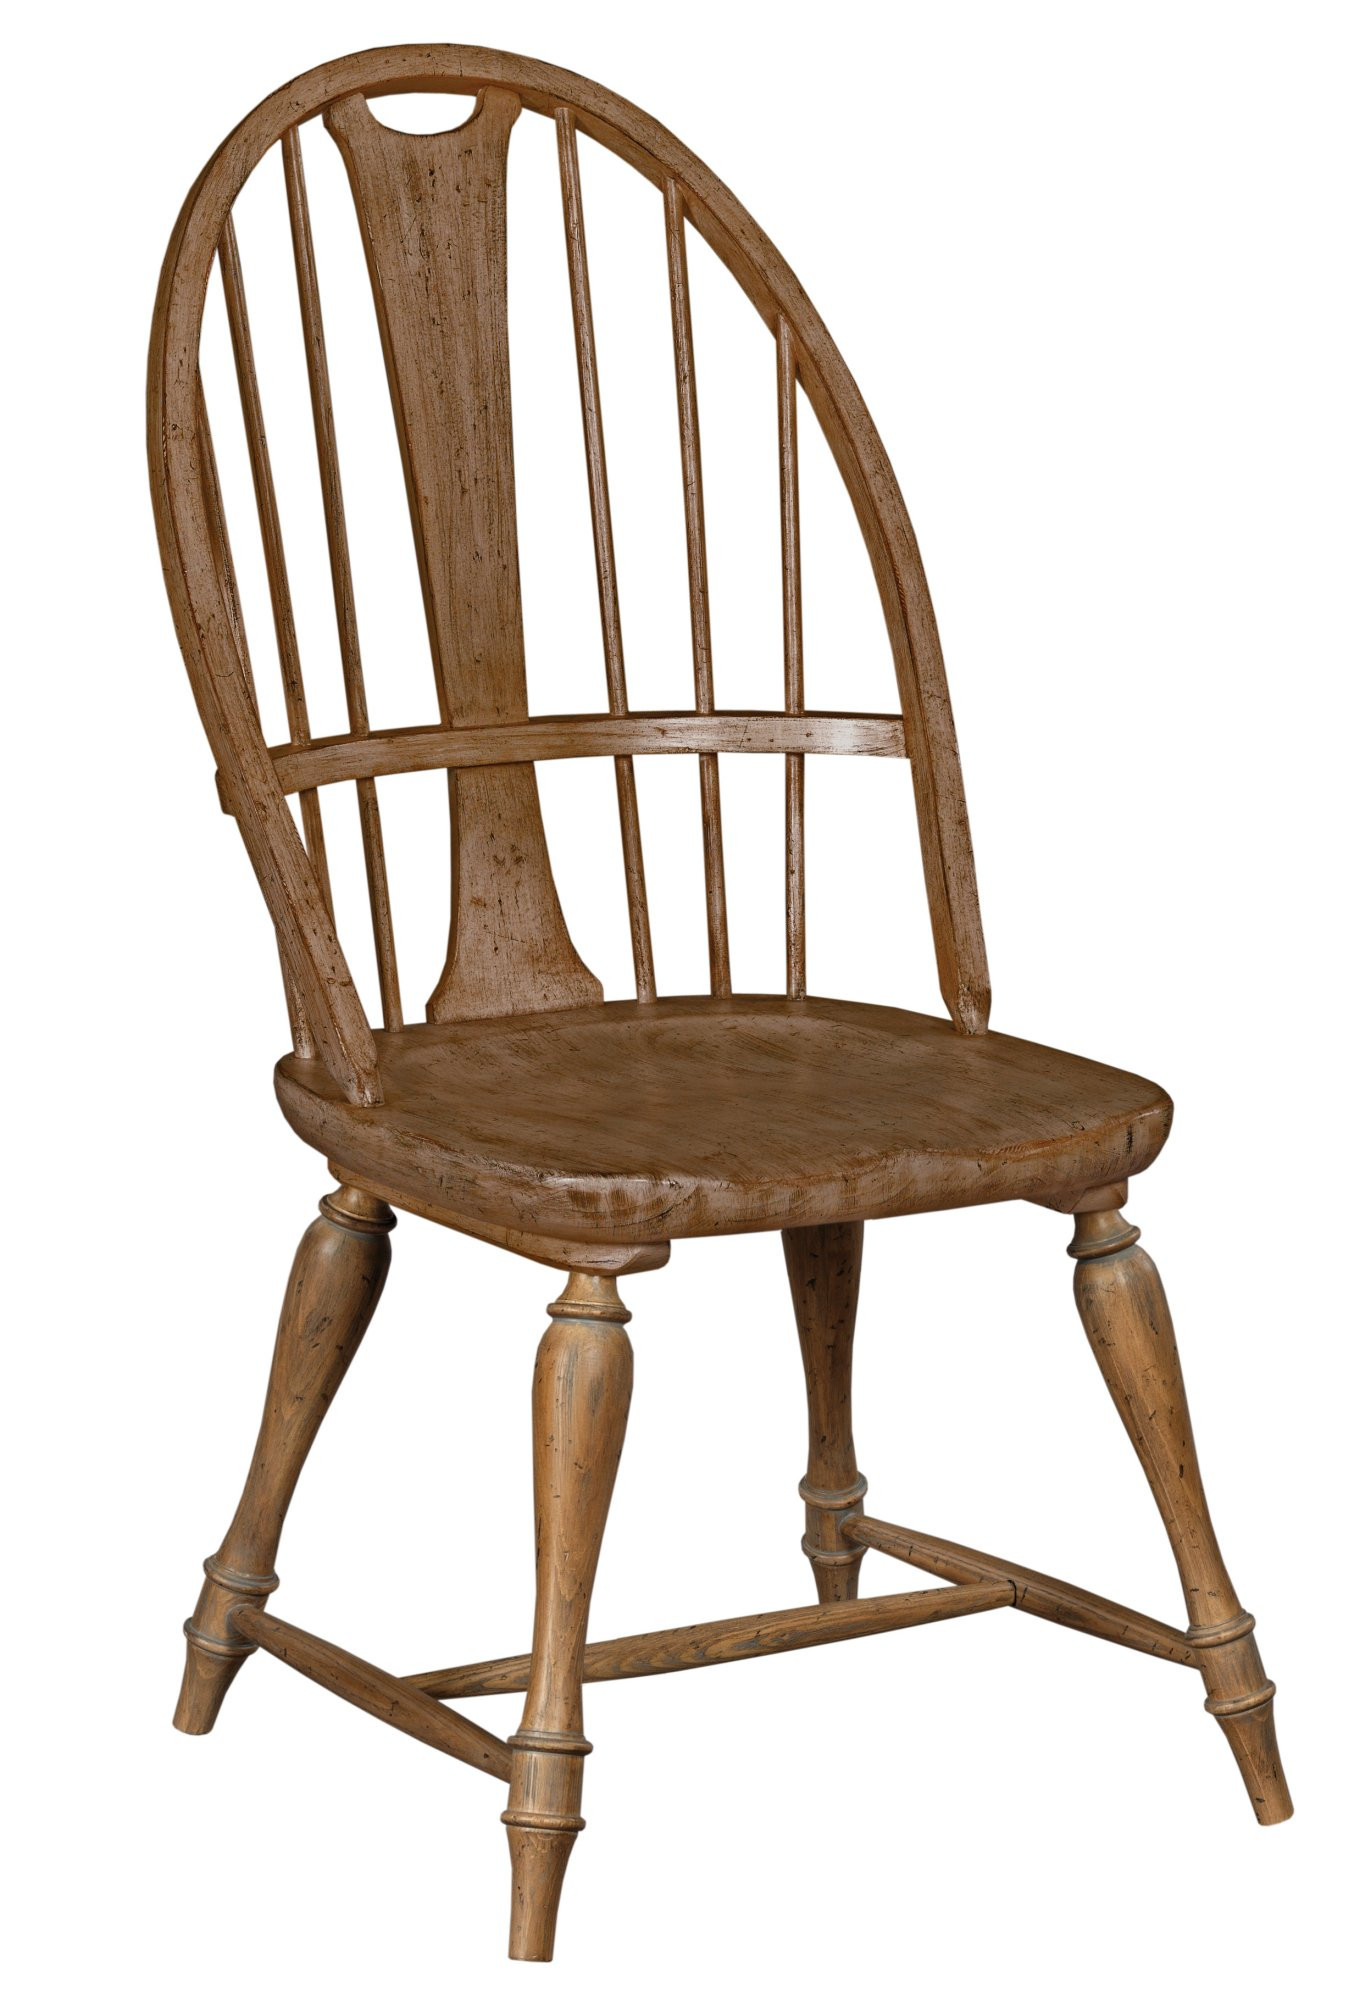 Baylis Side Chair